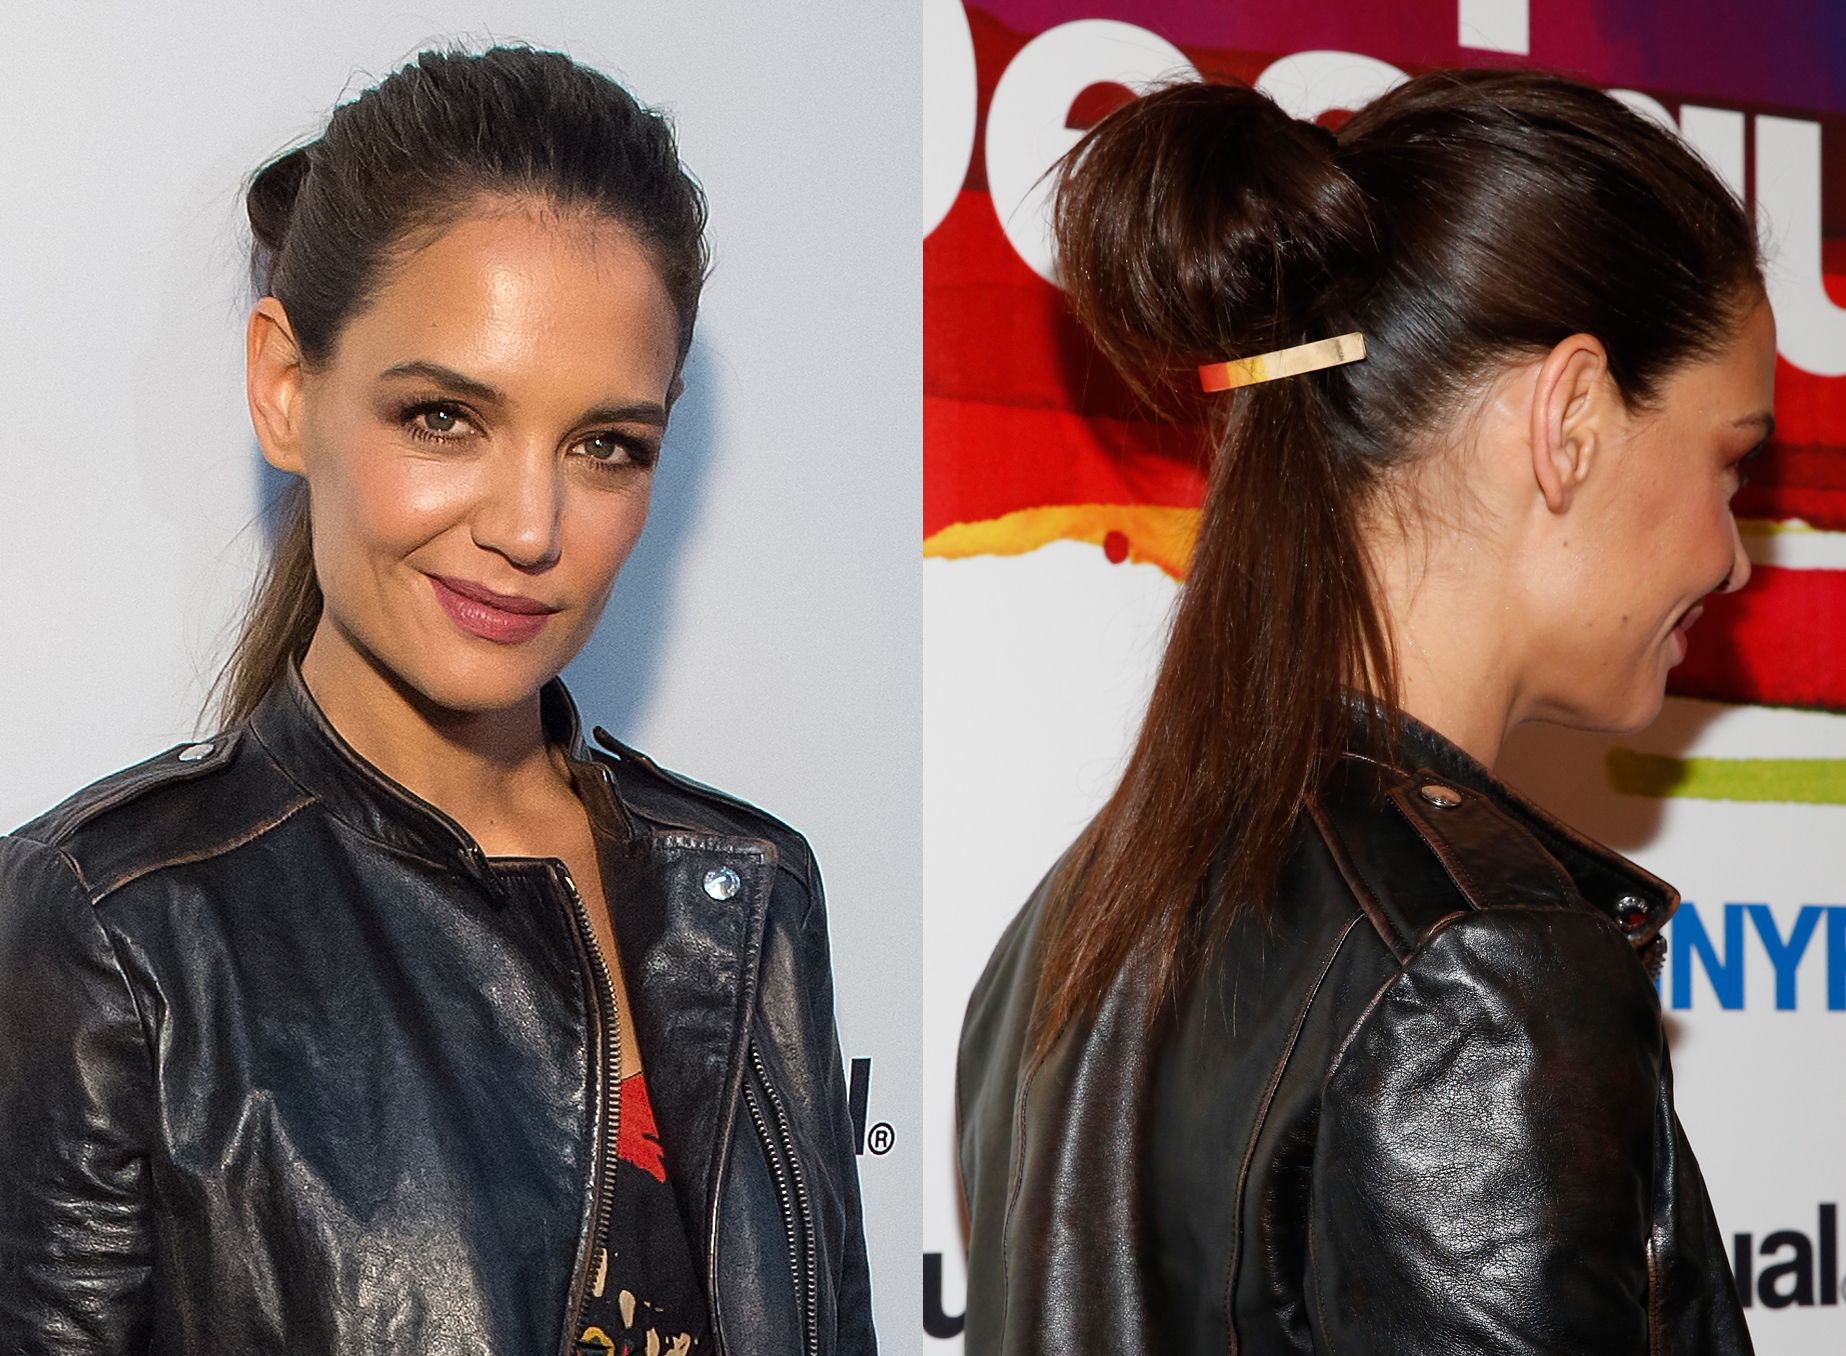 How celebrities wear hair accessories